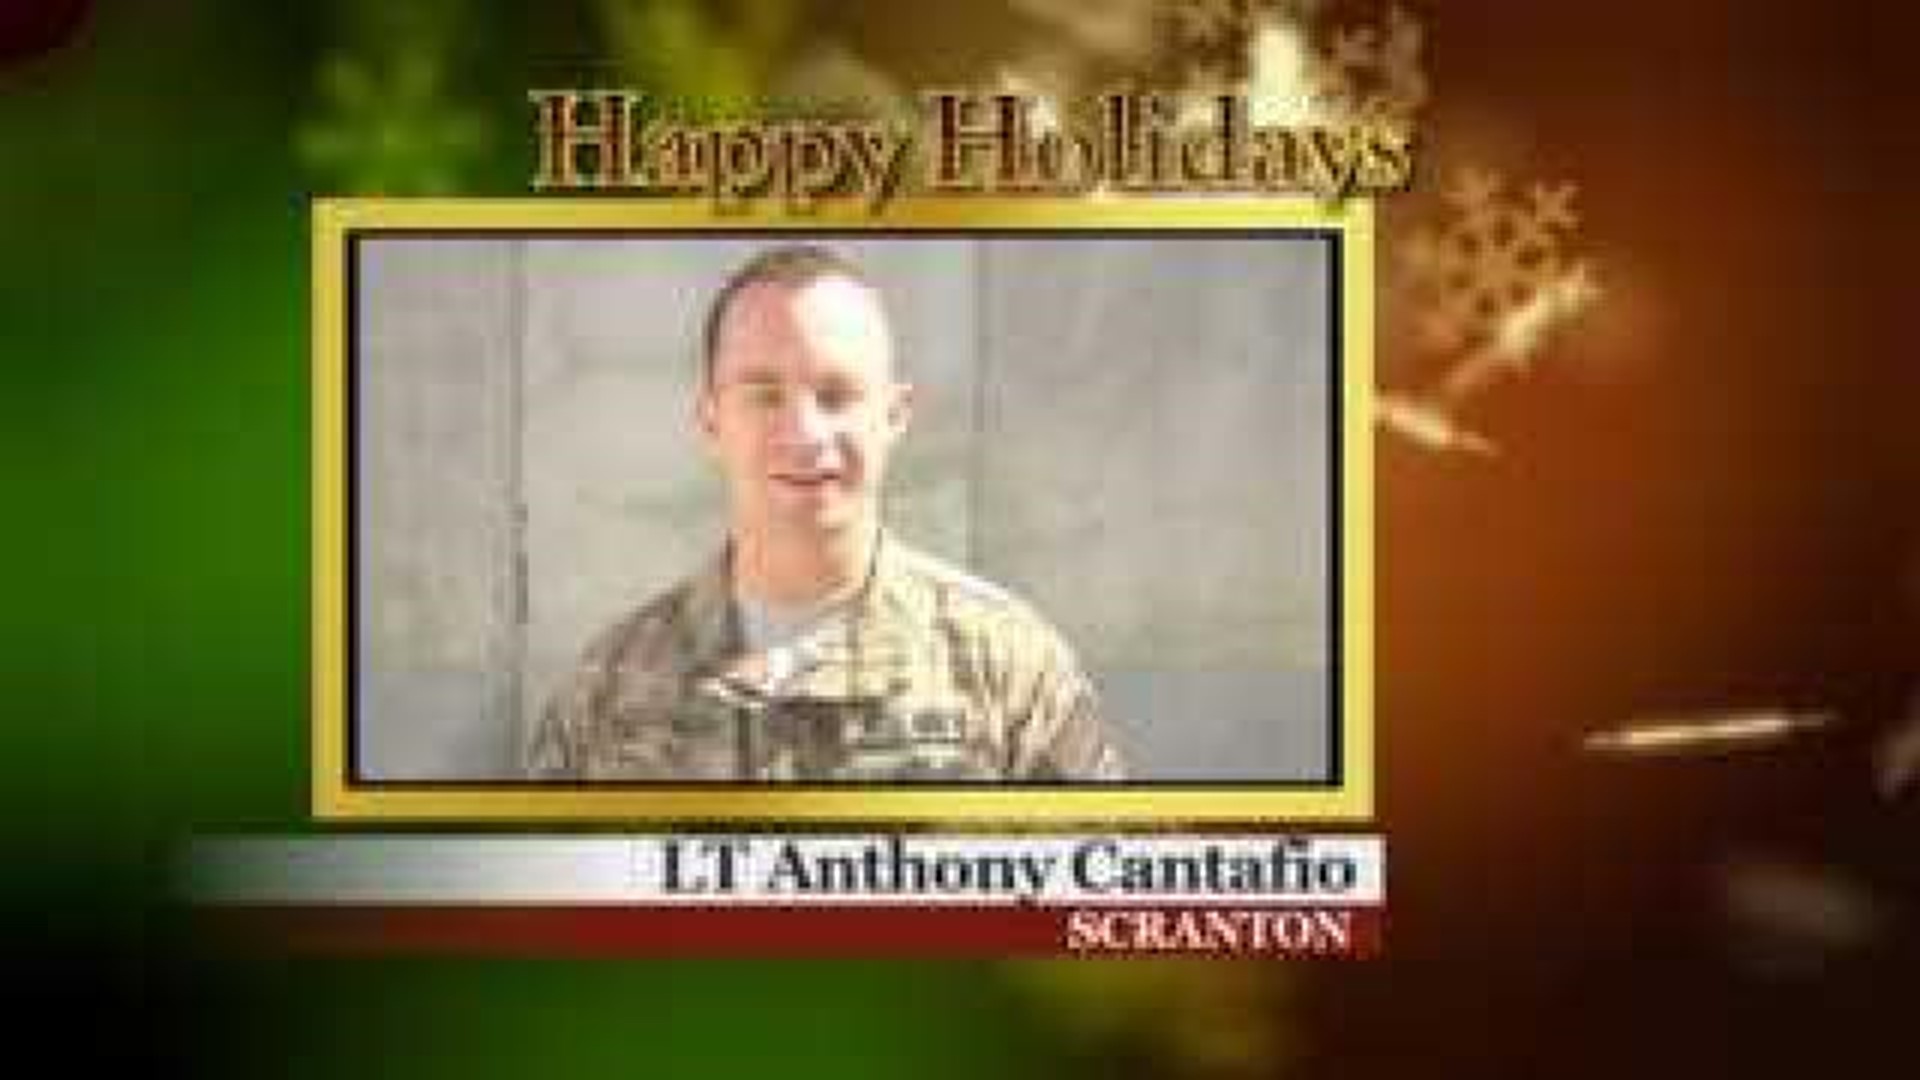 Military Greeting: LT Anthony Cantafio